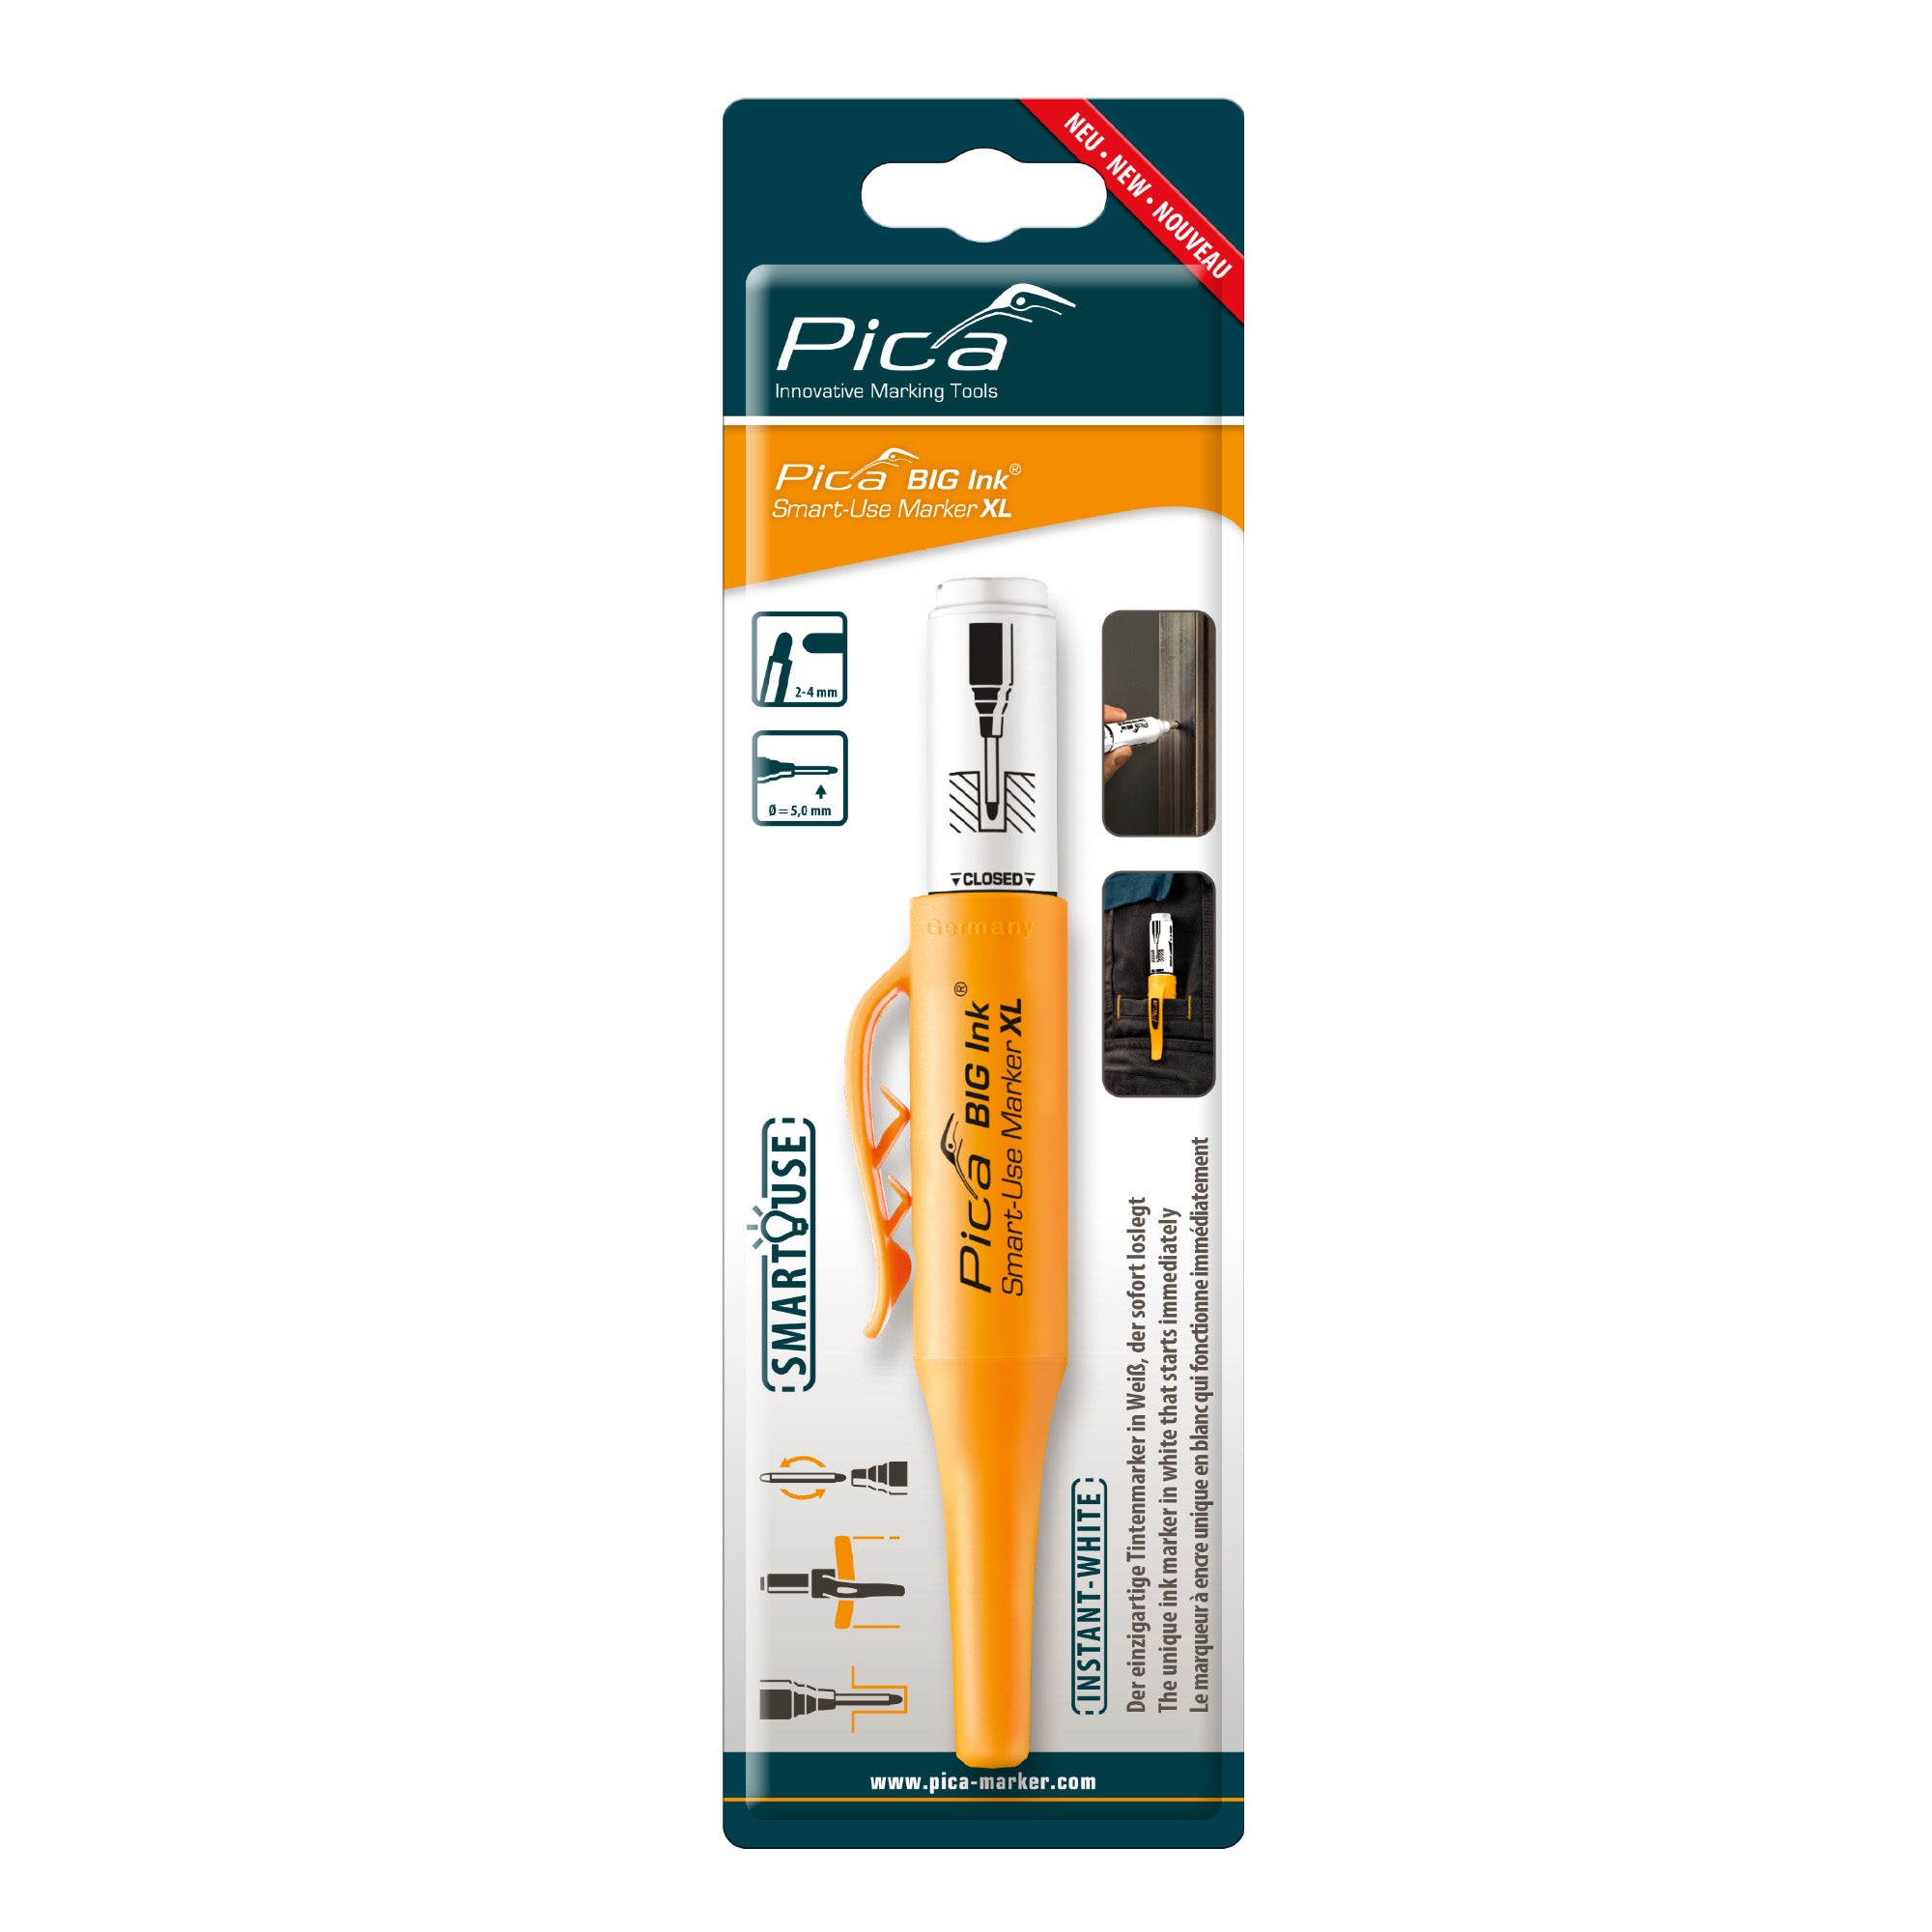 Pica BIG Ink Smart-Use Marker XL